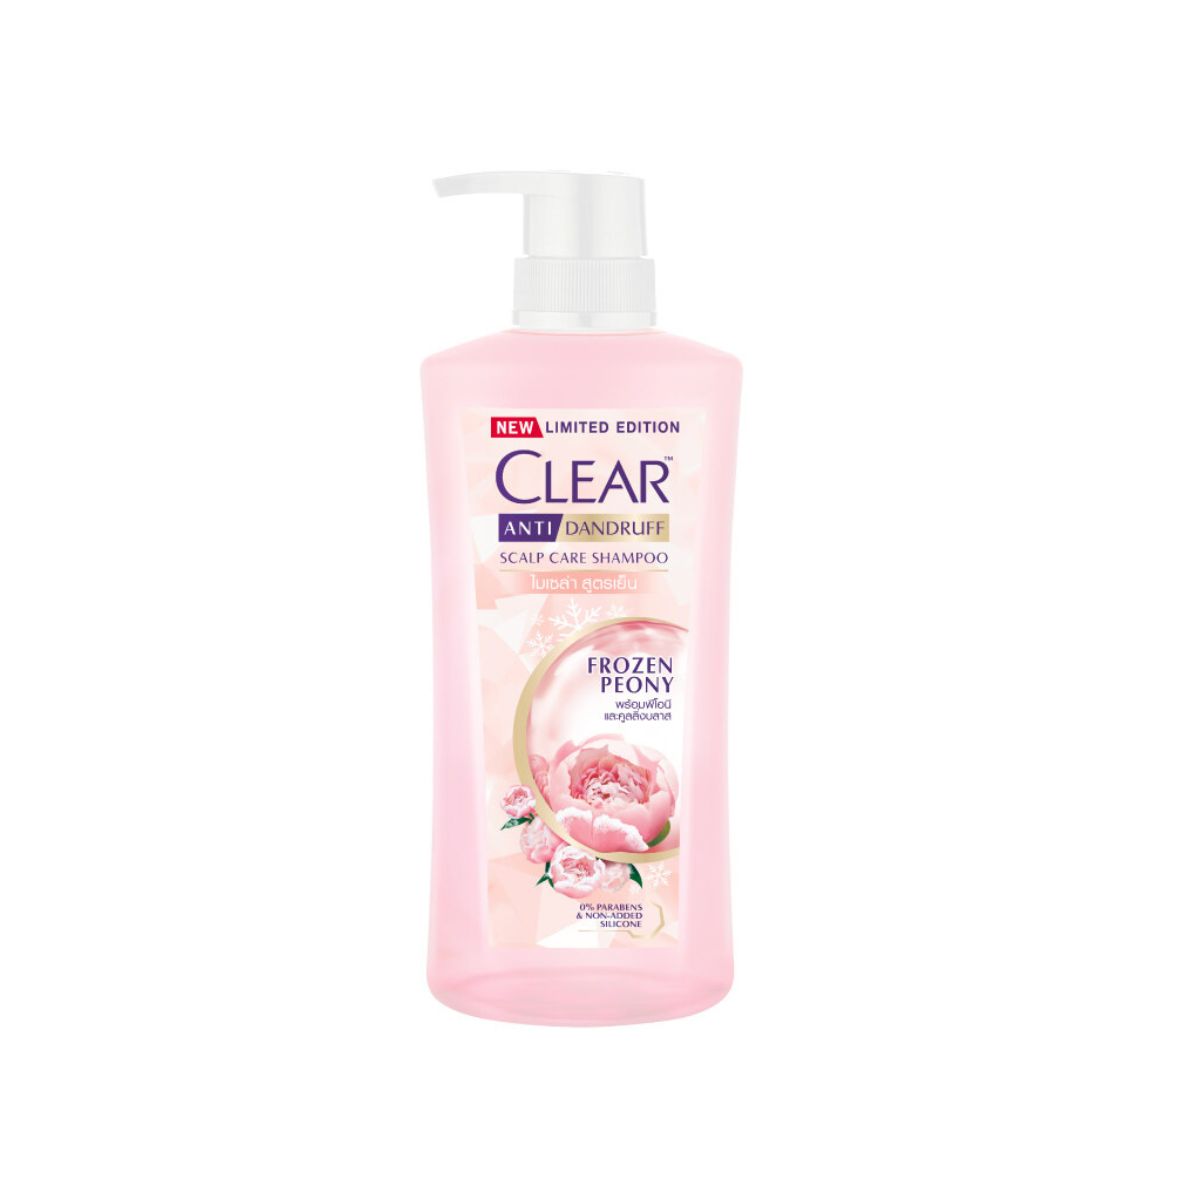 Clear Anti Dandruff Scalp Care Shampoo - Frozen Peony - 480ml